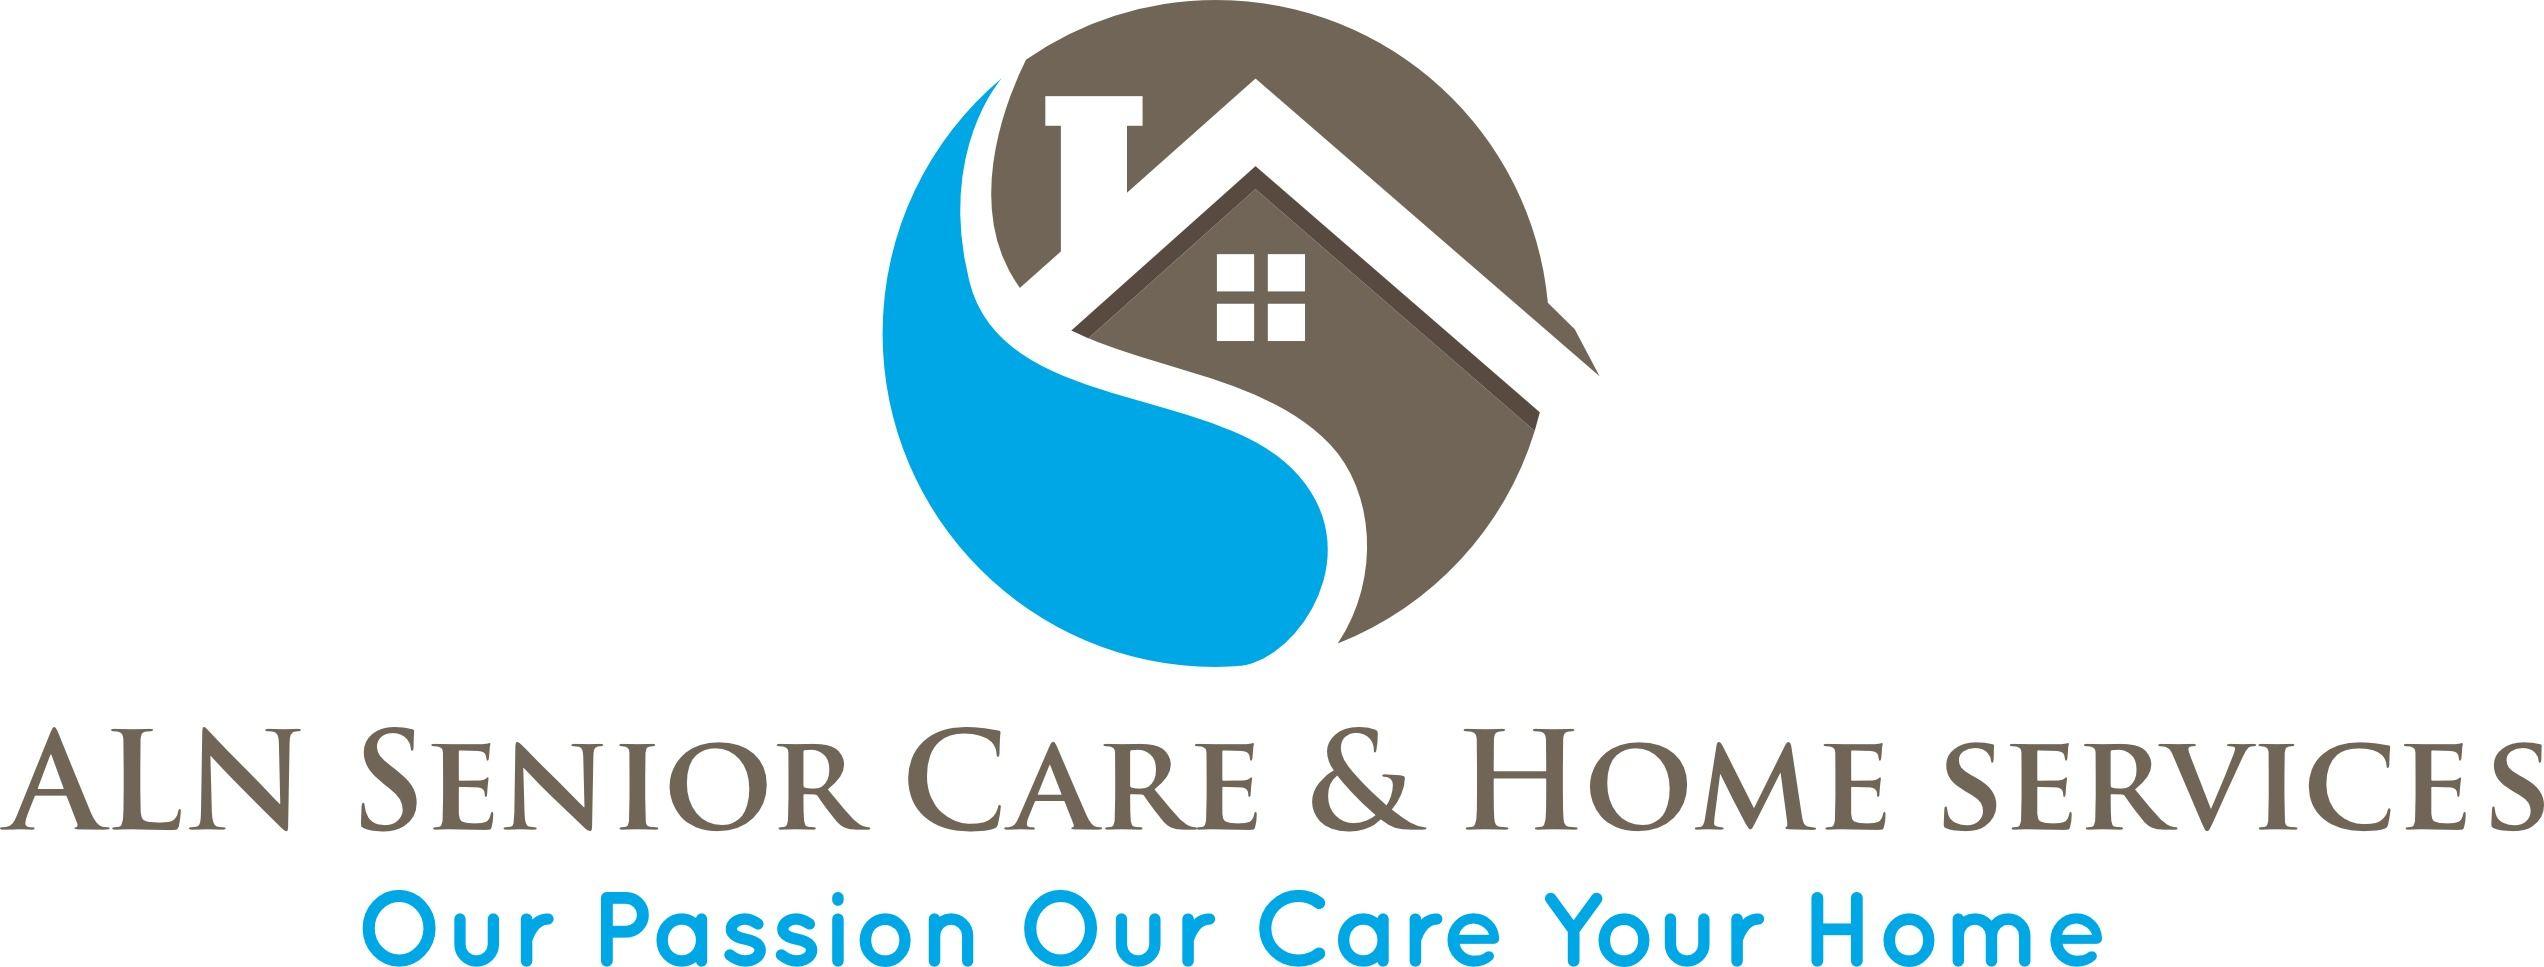 Senior Care Logo - Home healthcare troy, ohio - ALN Senior Care & Home Services